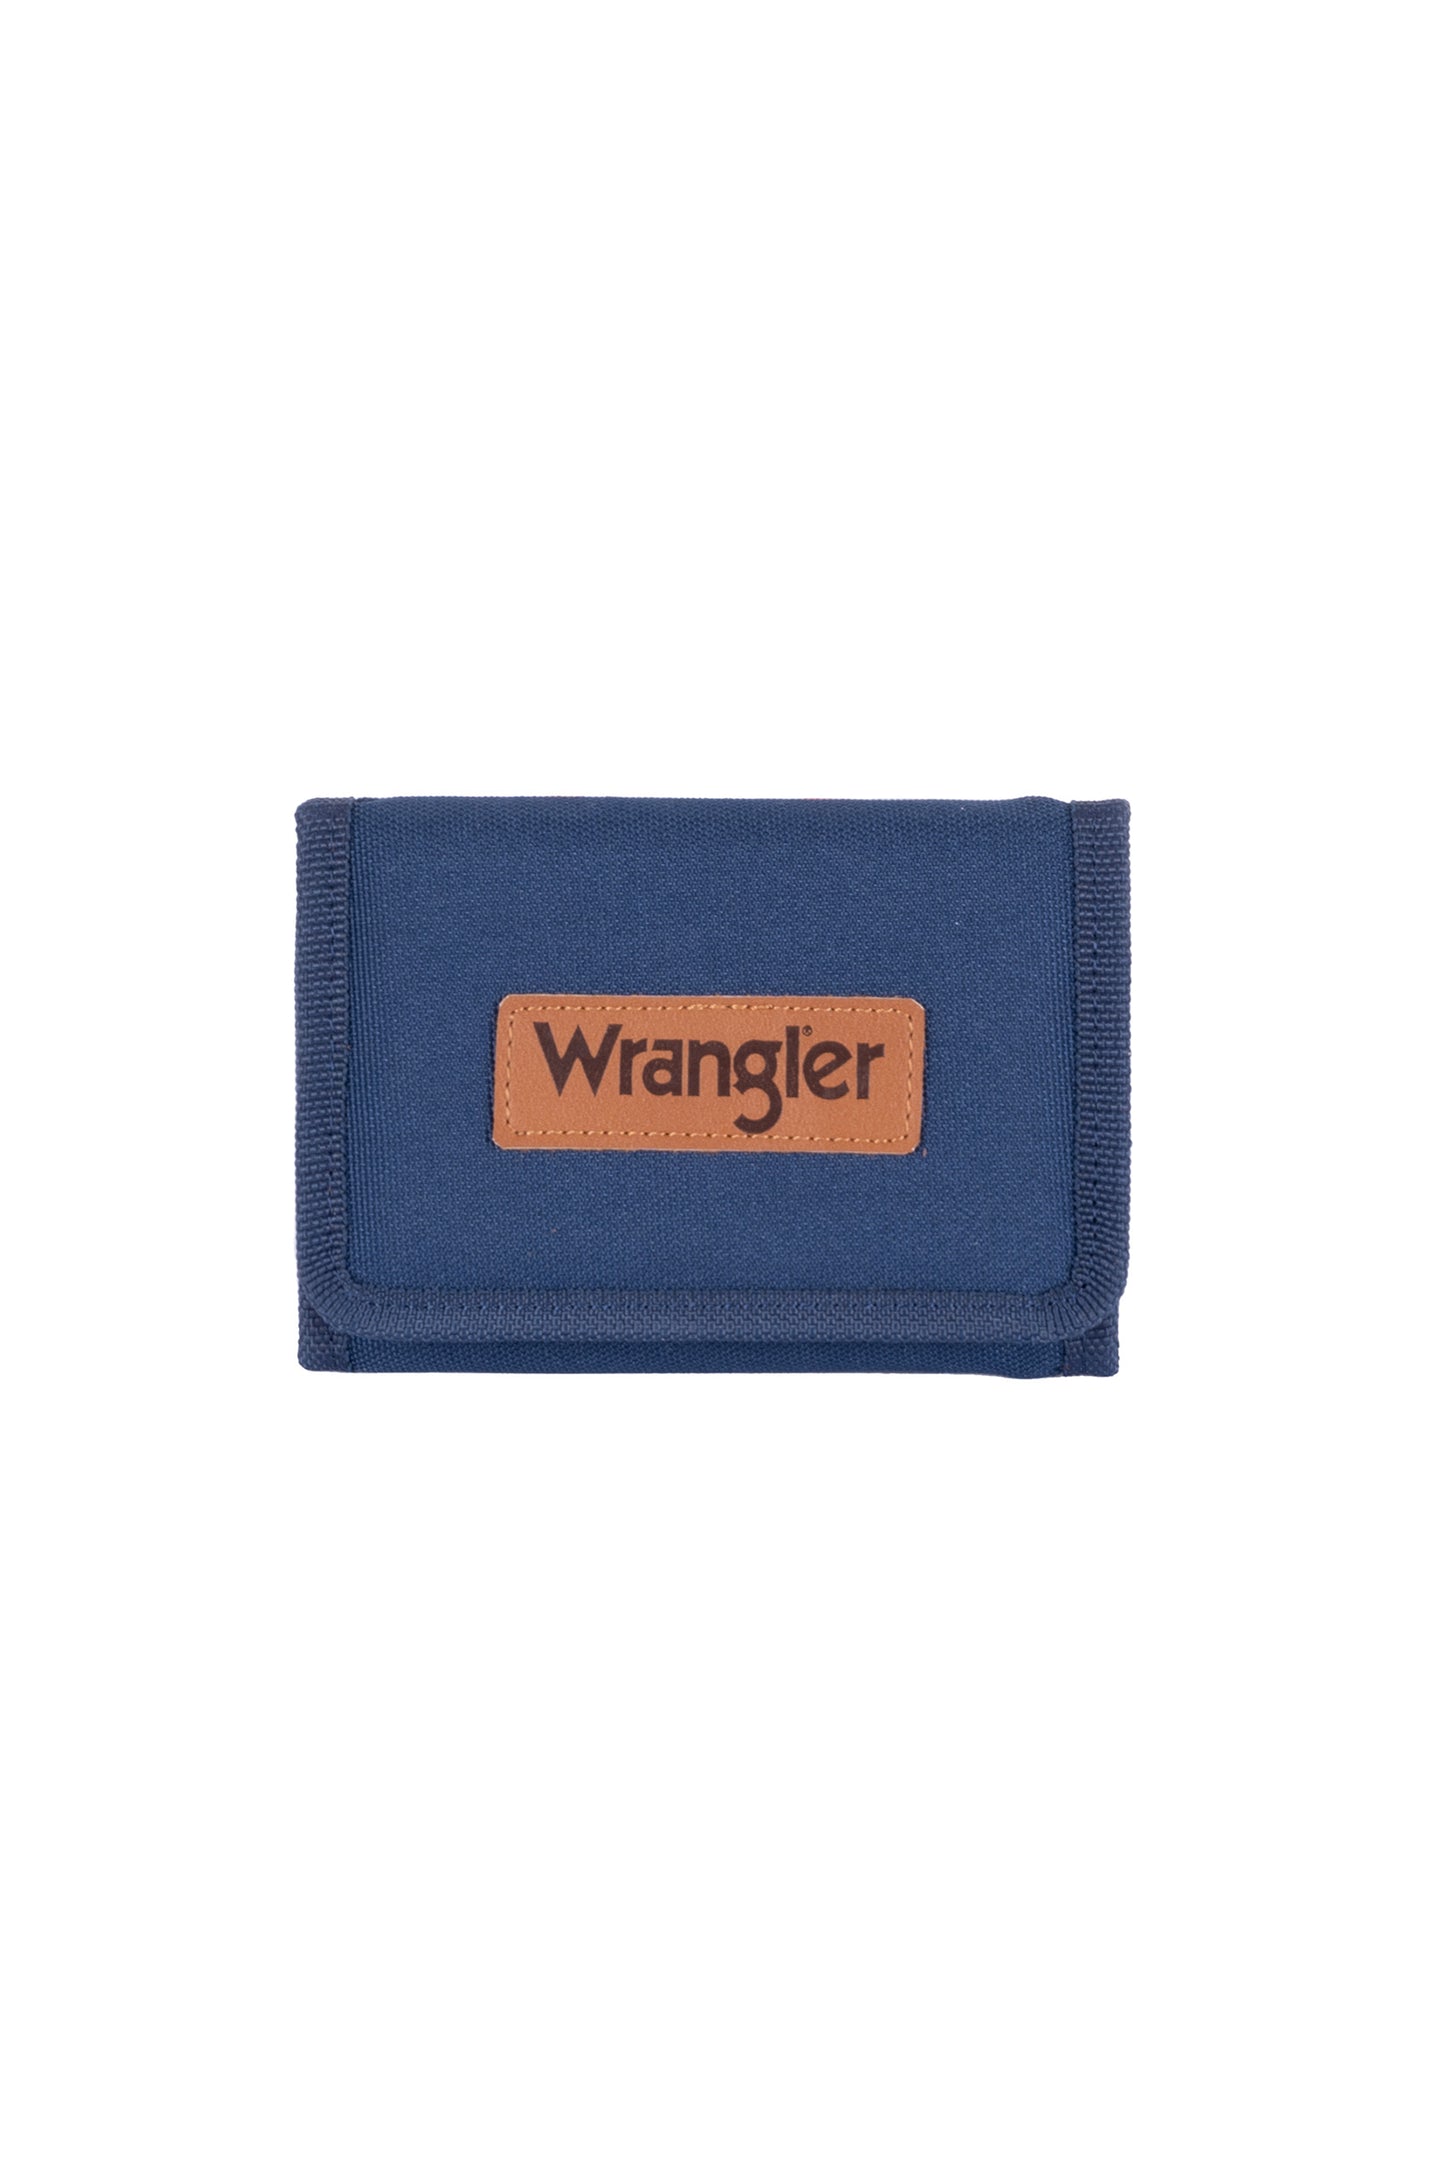 Wrangler Logo Wallet - Navy - XCP1947WLT